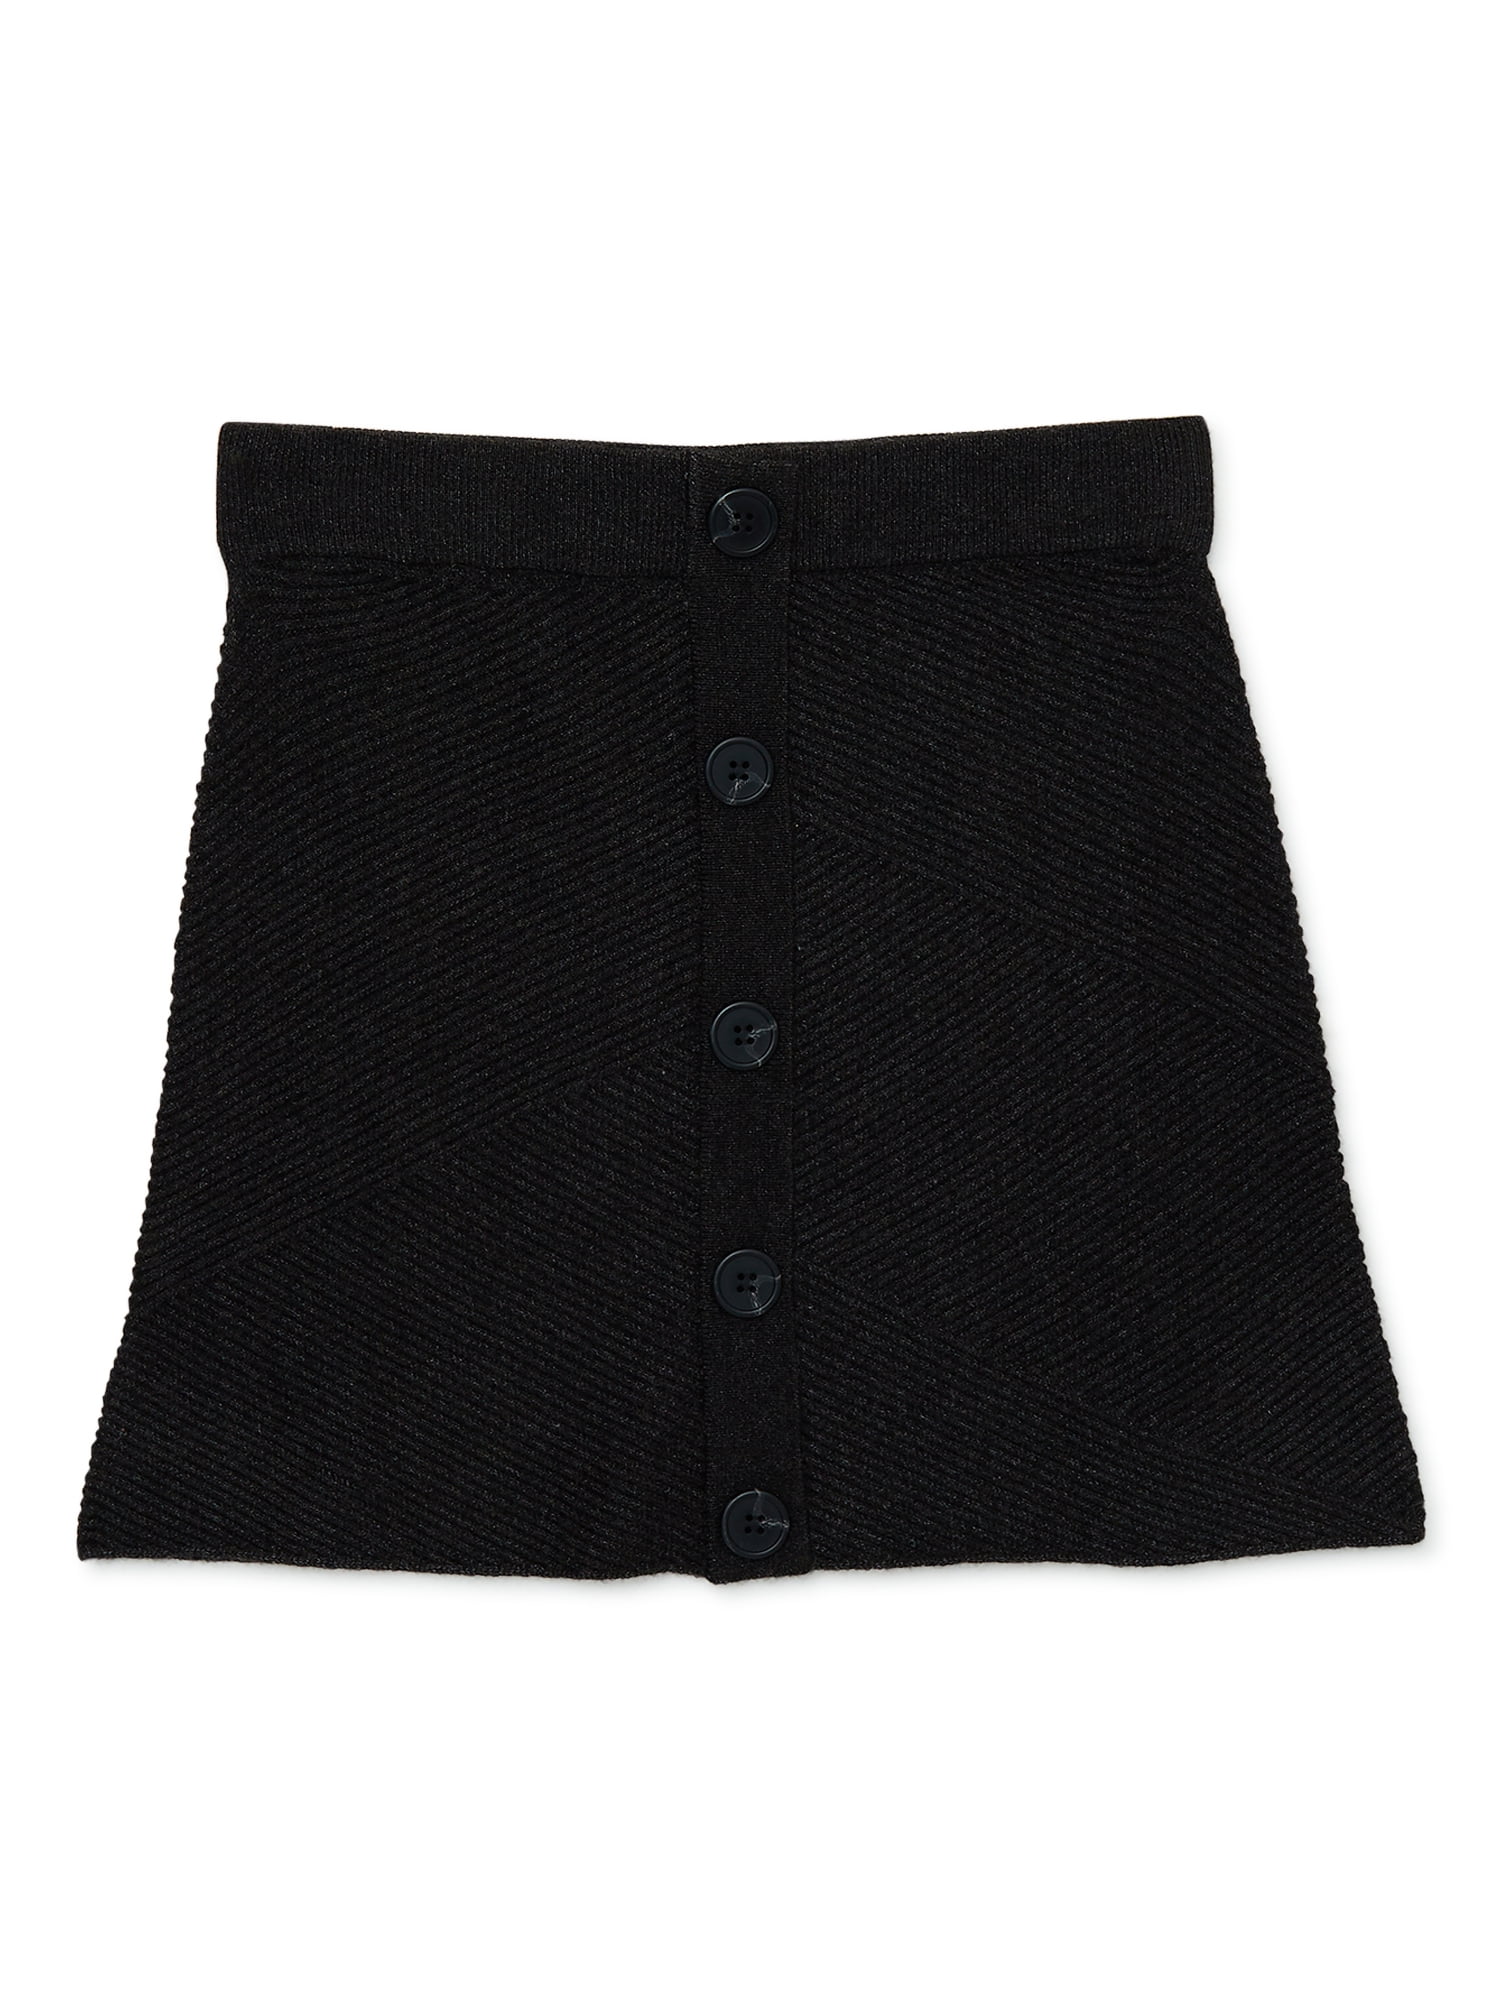 Wonder Nation Girls Sweater Skirt, Sizes 4-18 & Plus